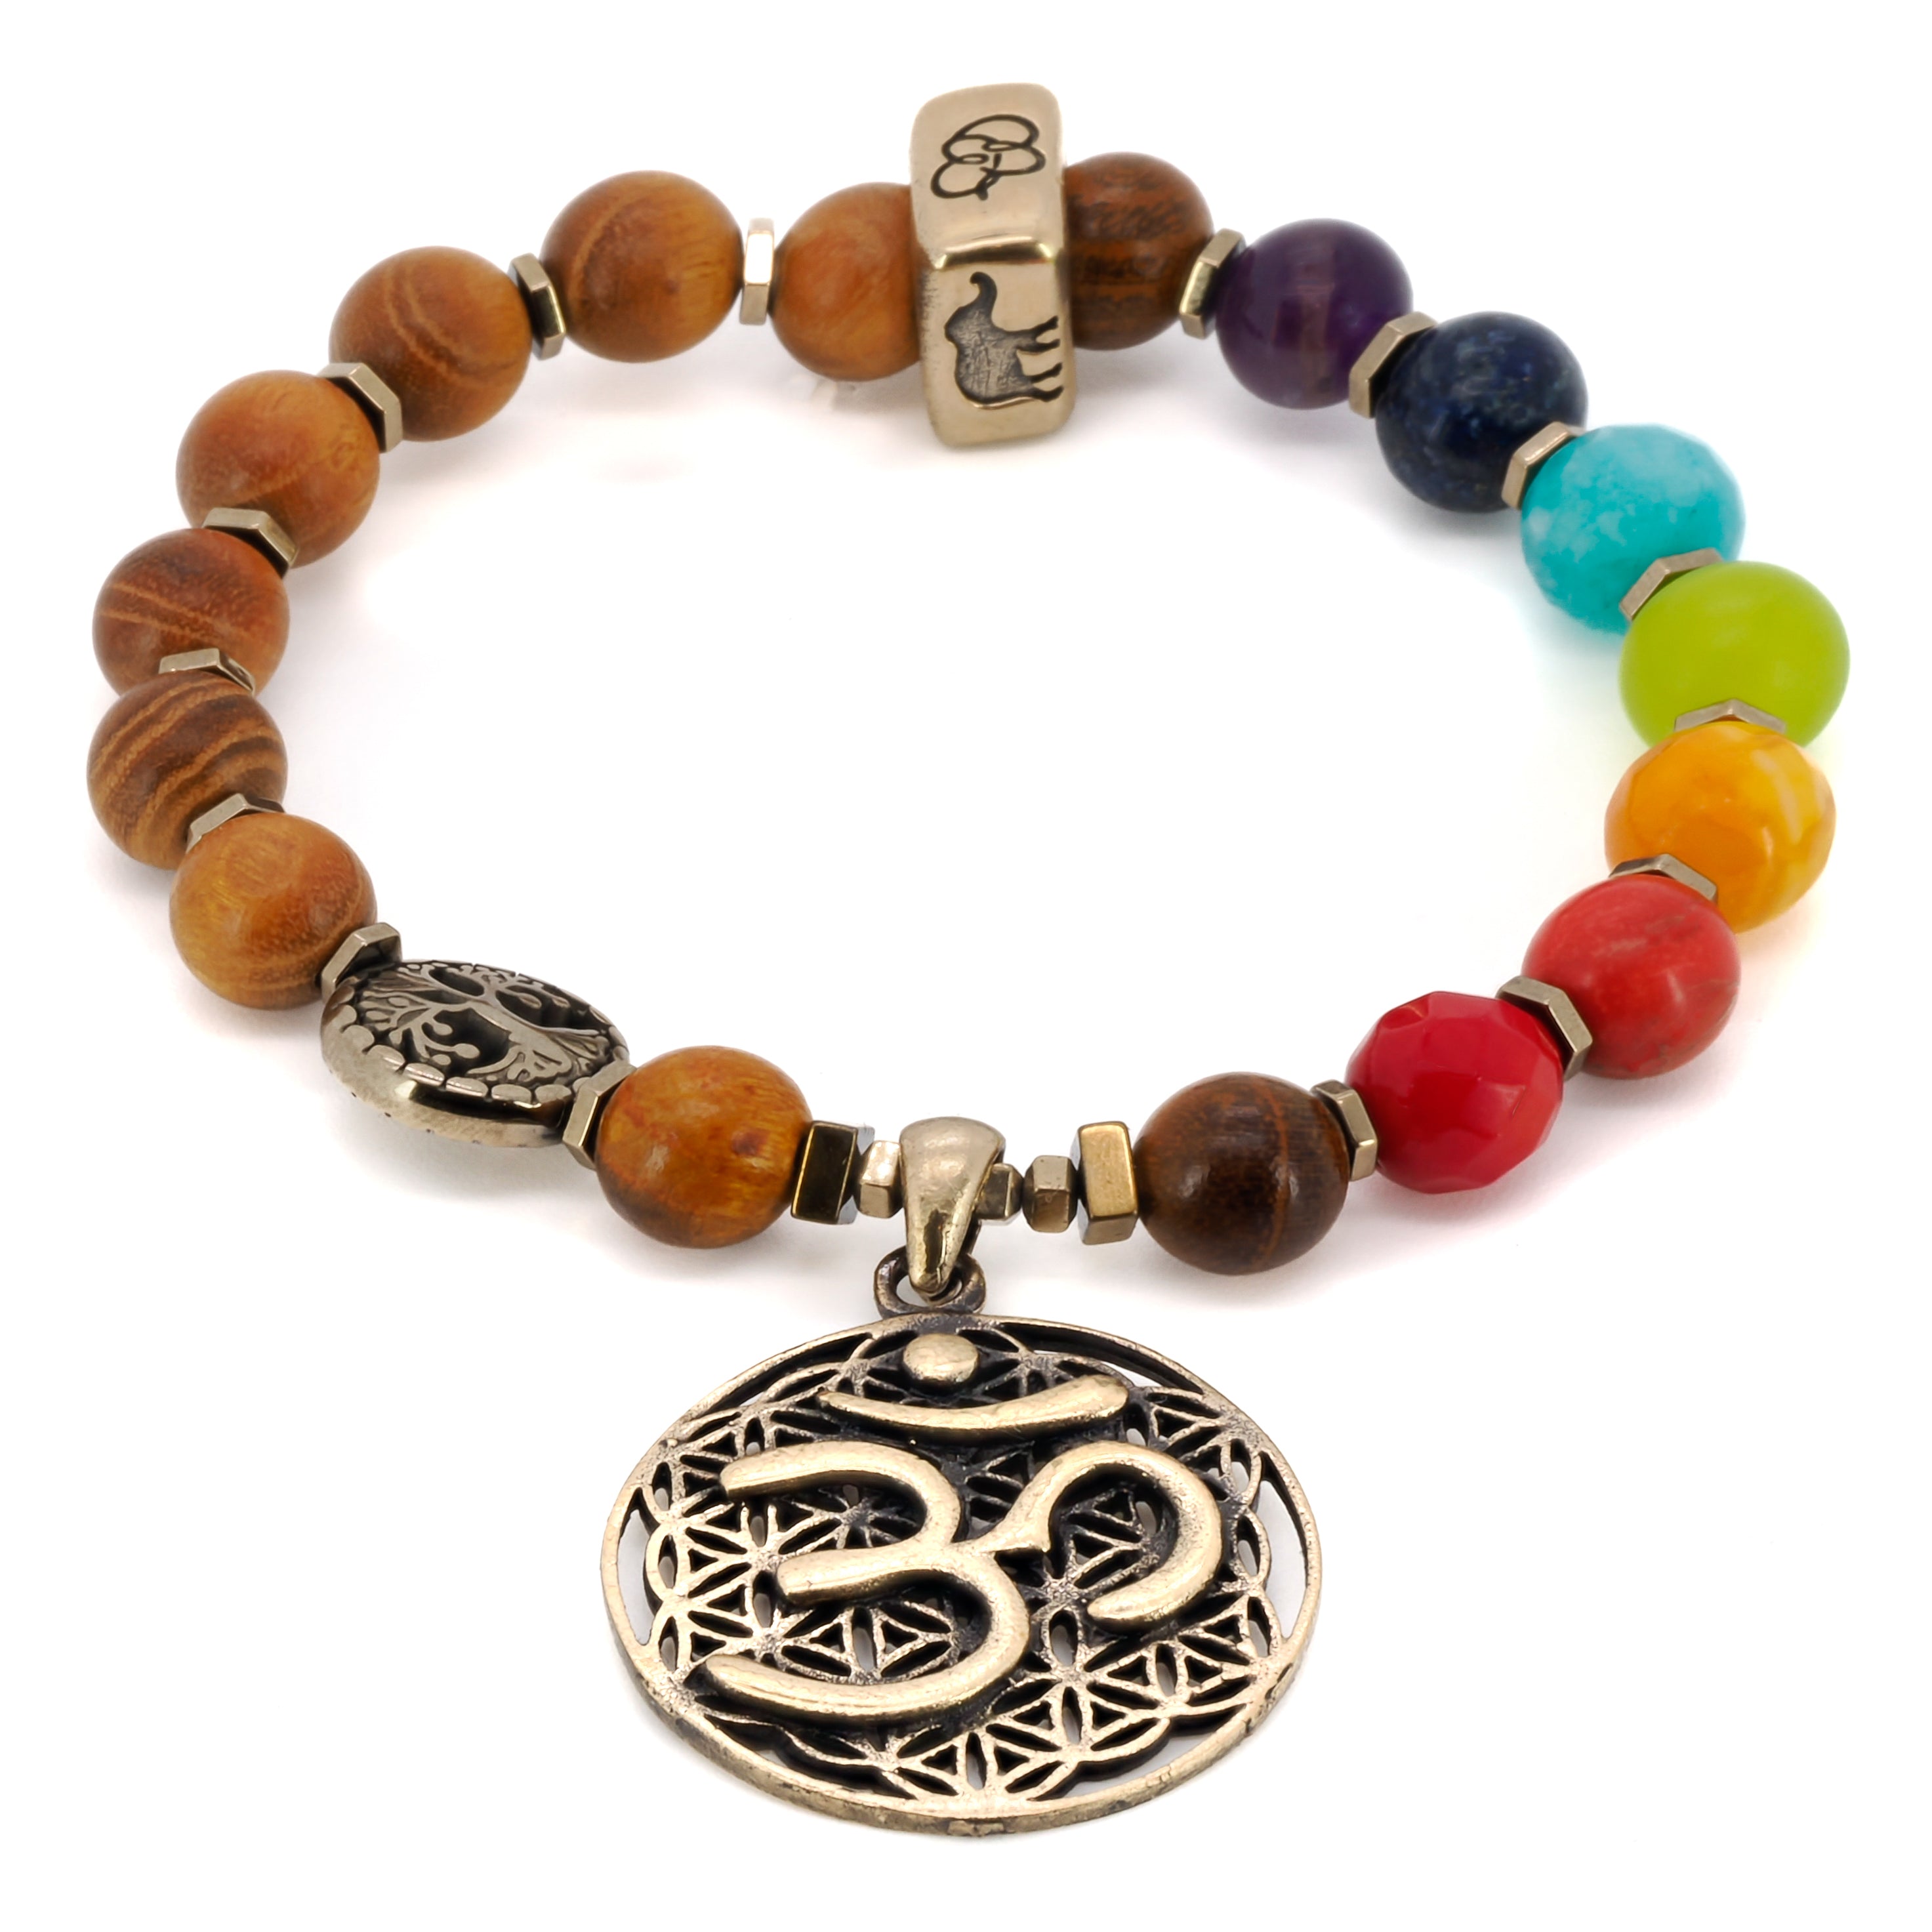 The Chakra Mini Mala Talisman Bracelet, a harmonious blend of spirituality and healing.